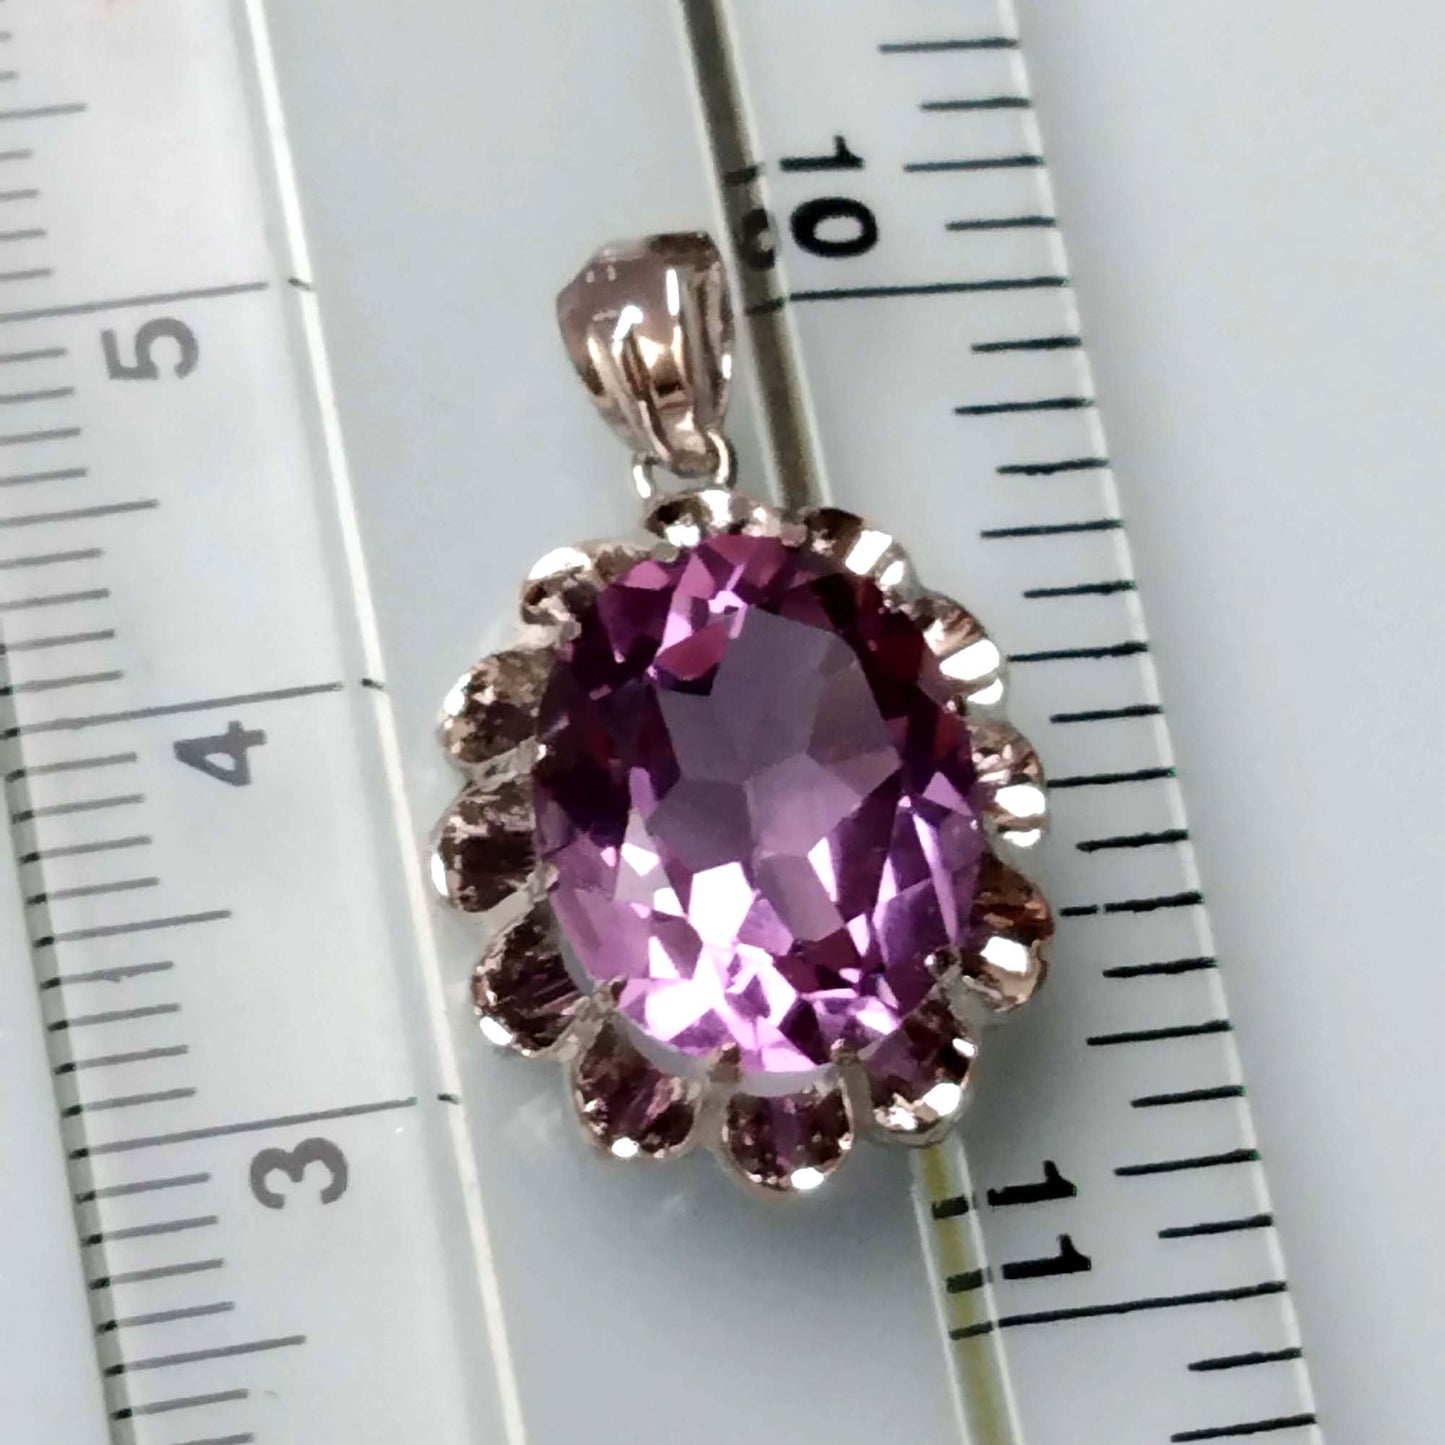 Oval Amethyst Pendant in Sterling Silver, Violet Gemstone Jewelry